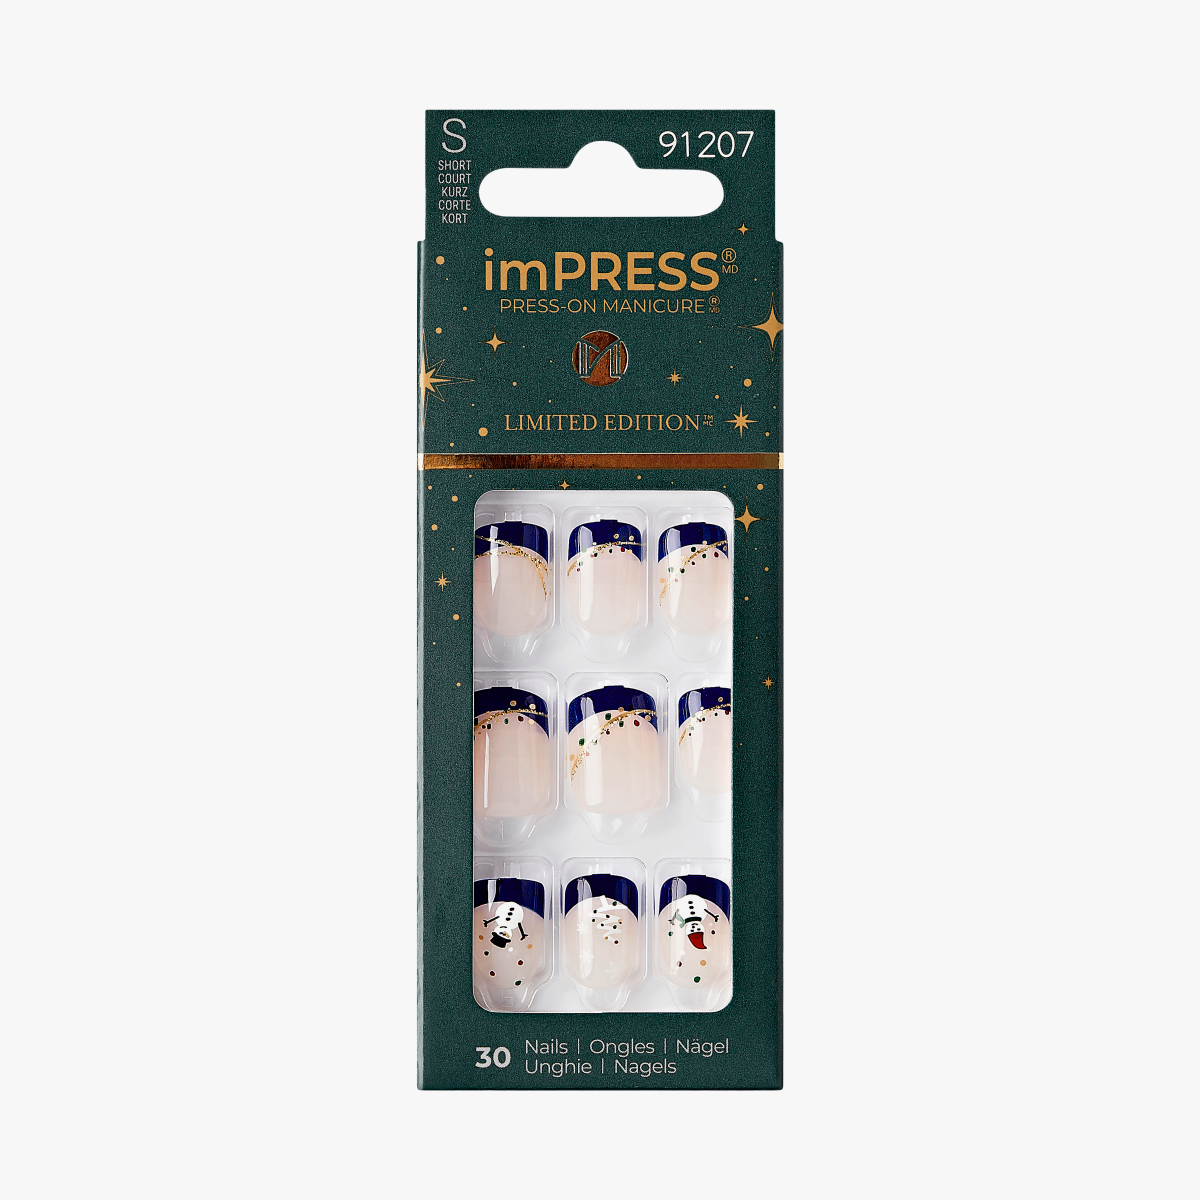 imPRESS Holiday Press-On Manicure - Very Merry